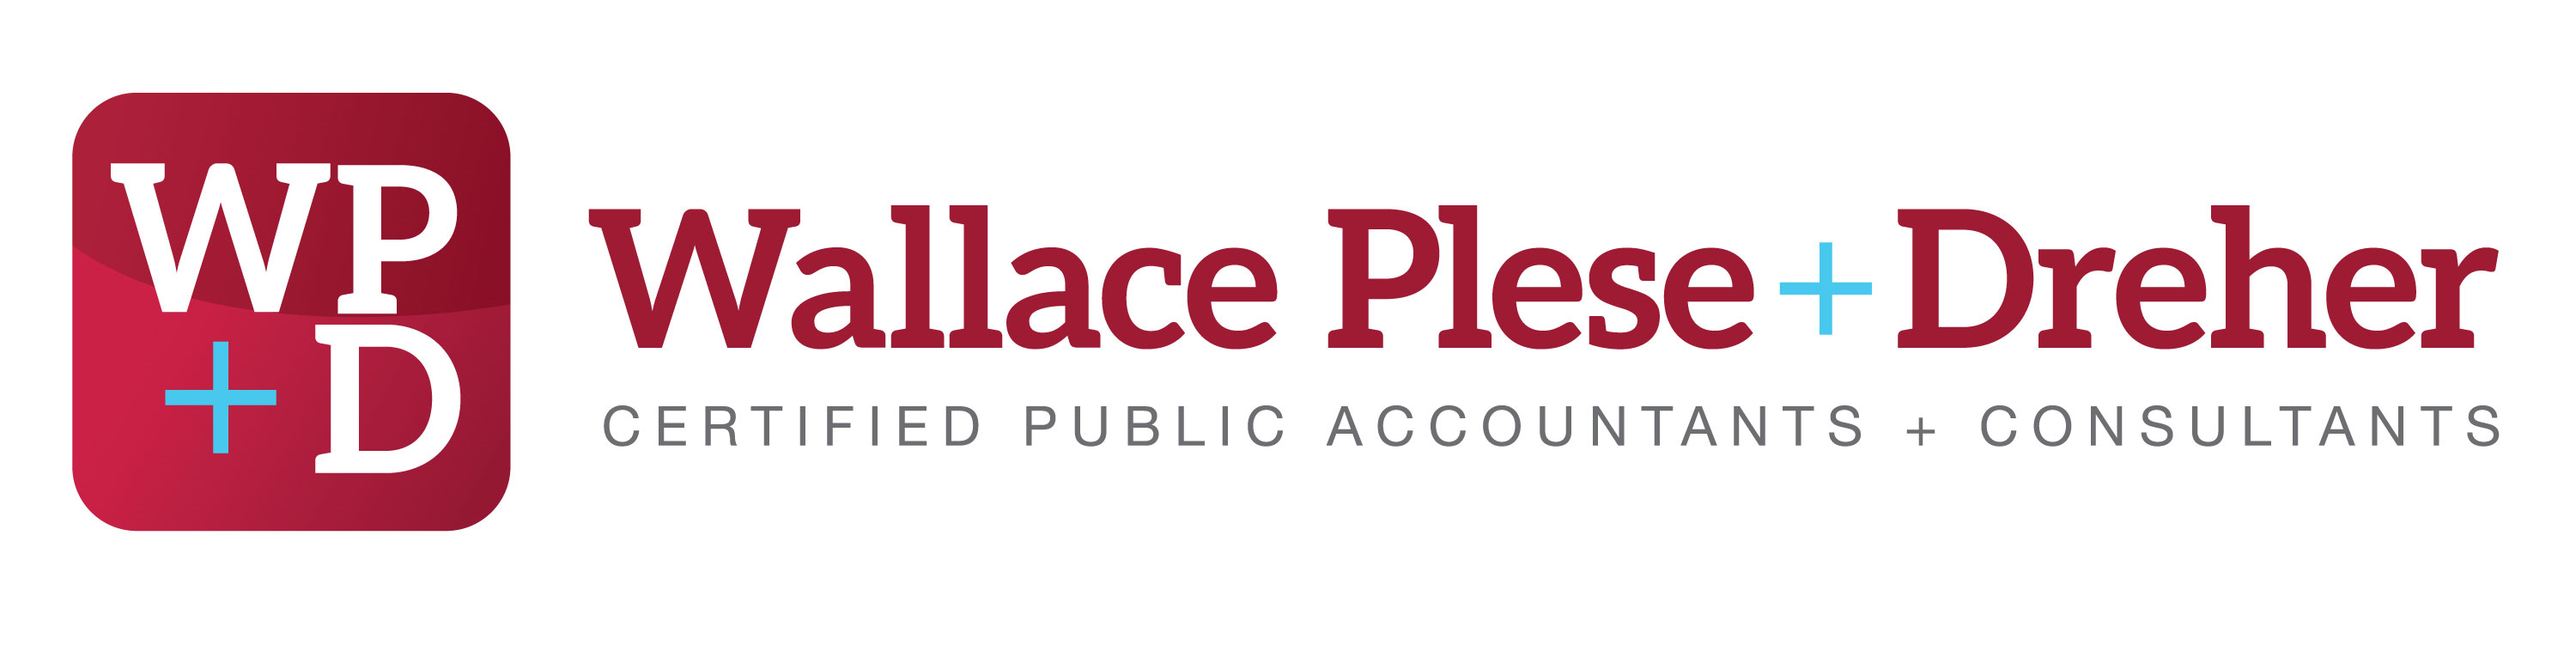 Wallace, Plese + Dreher logo